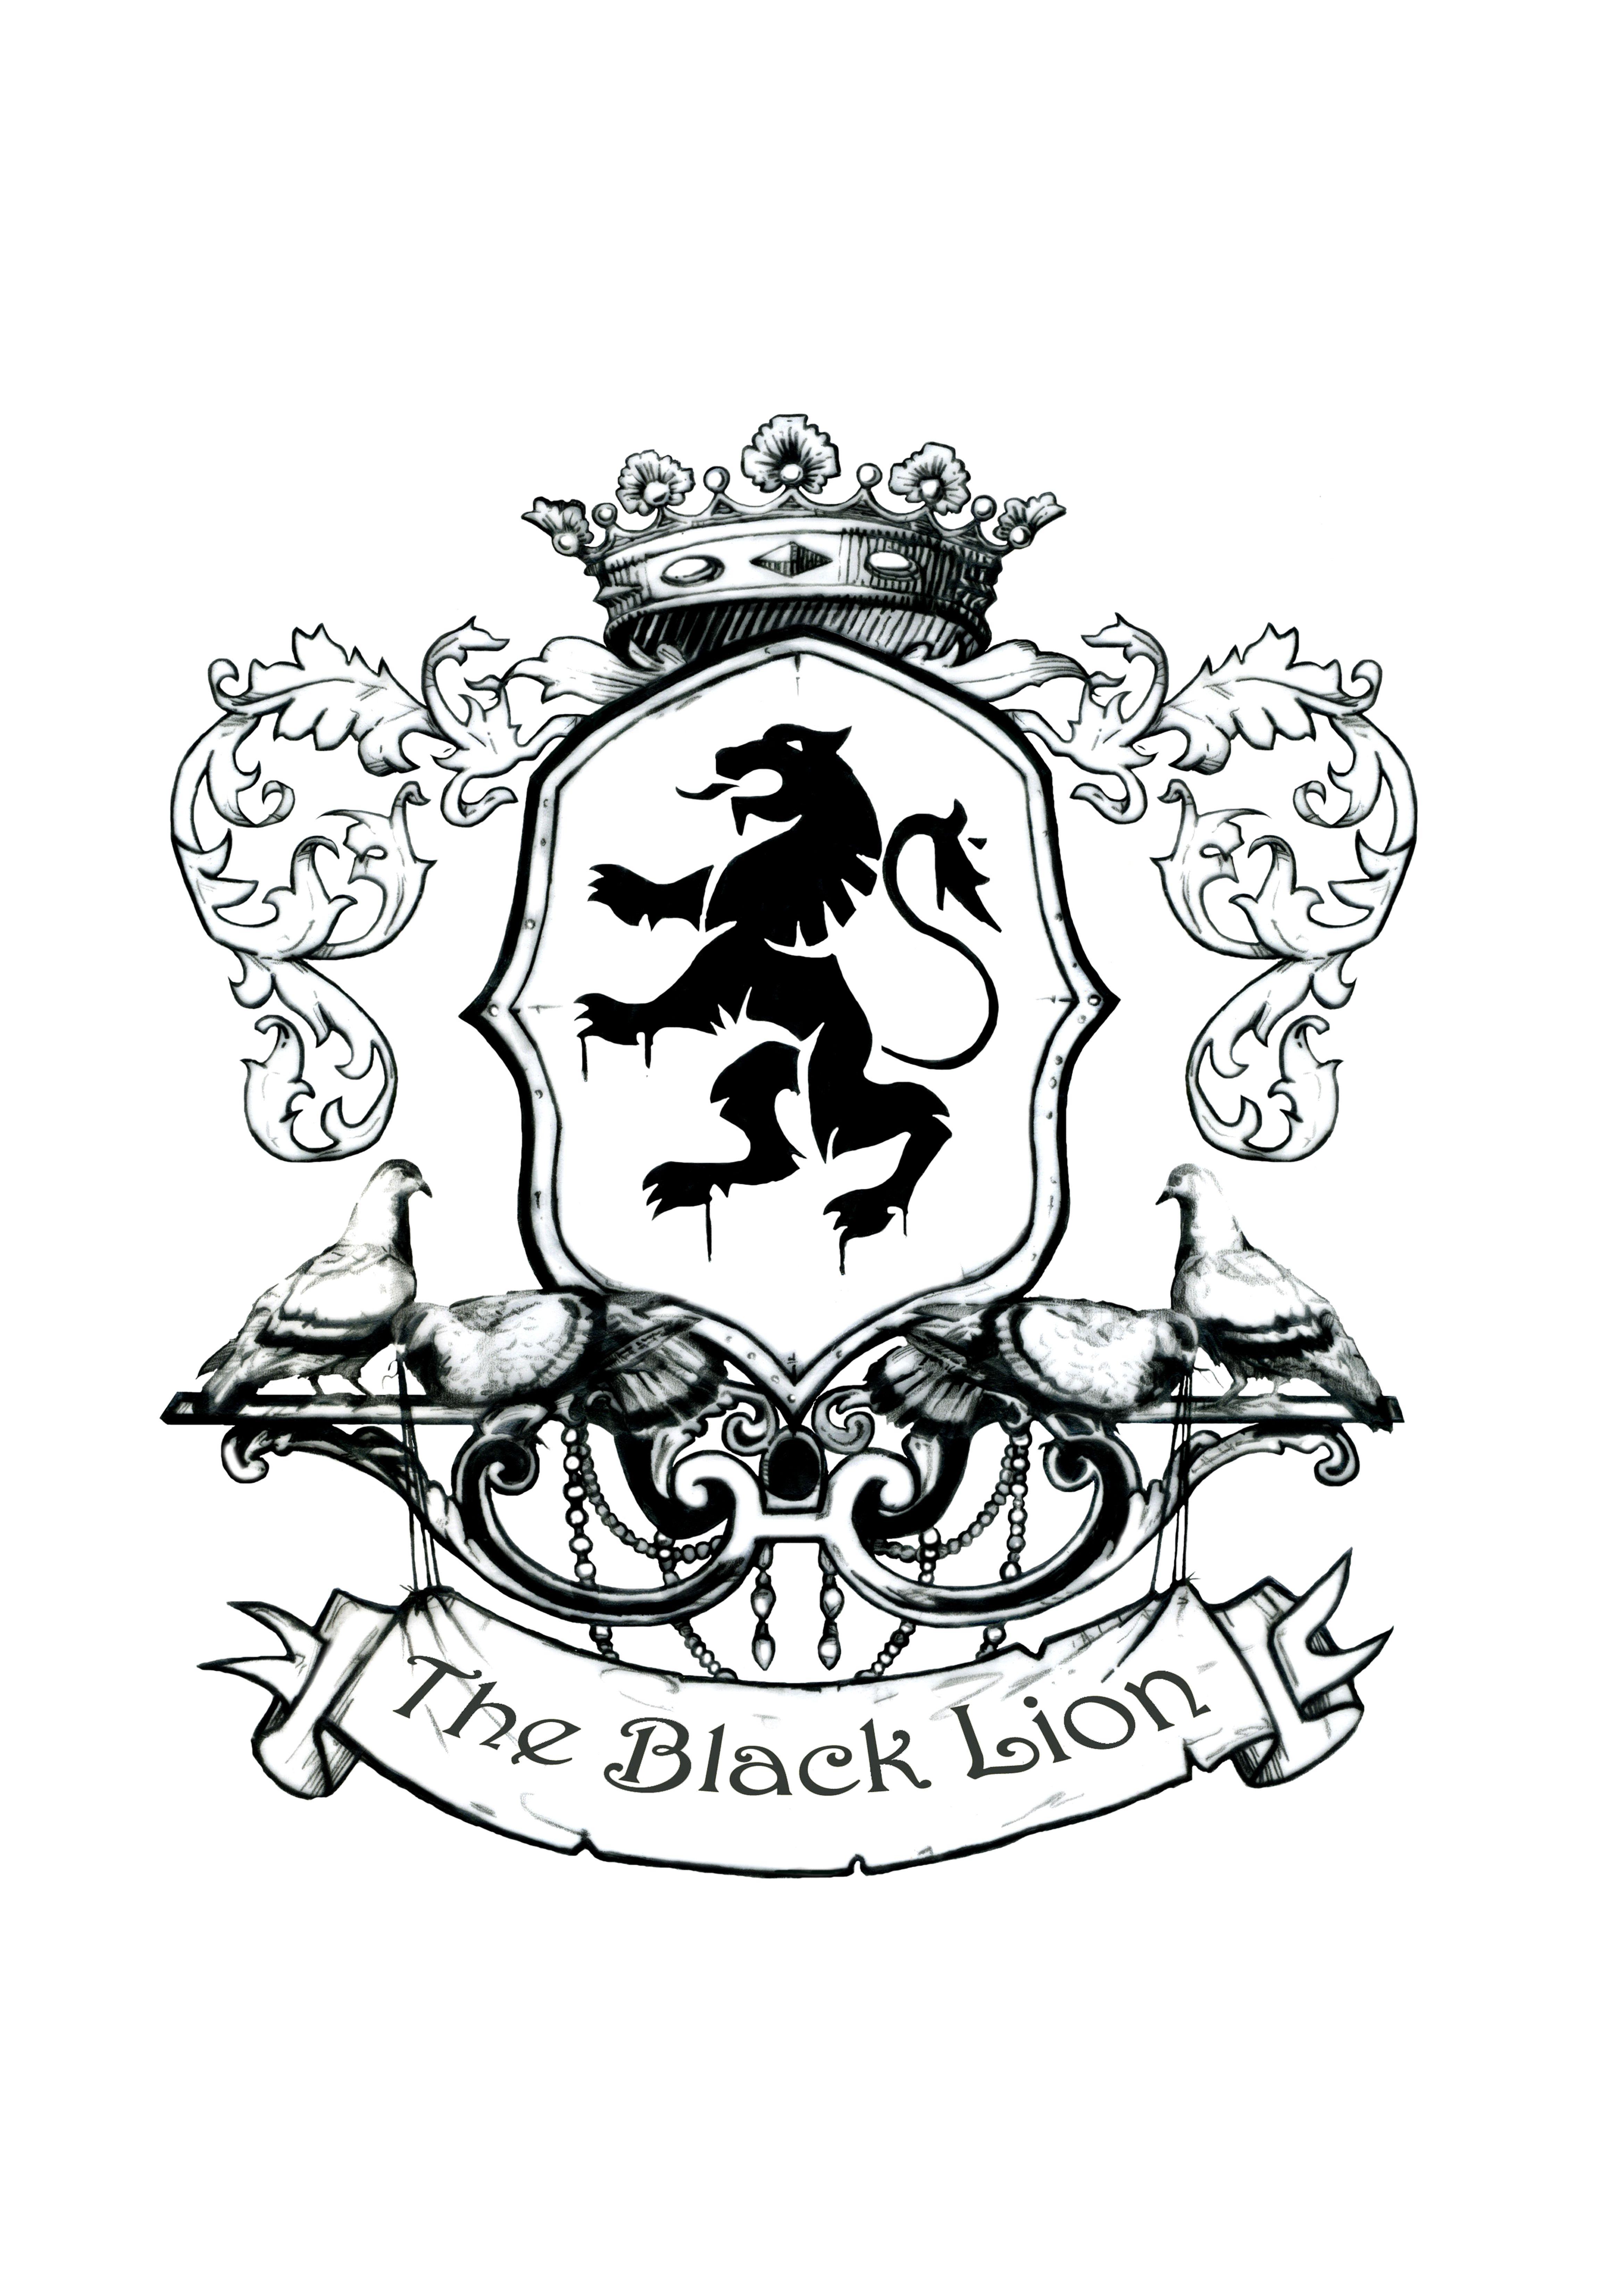 Black Lion Logo - Black Lion salford logo